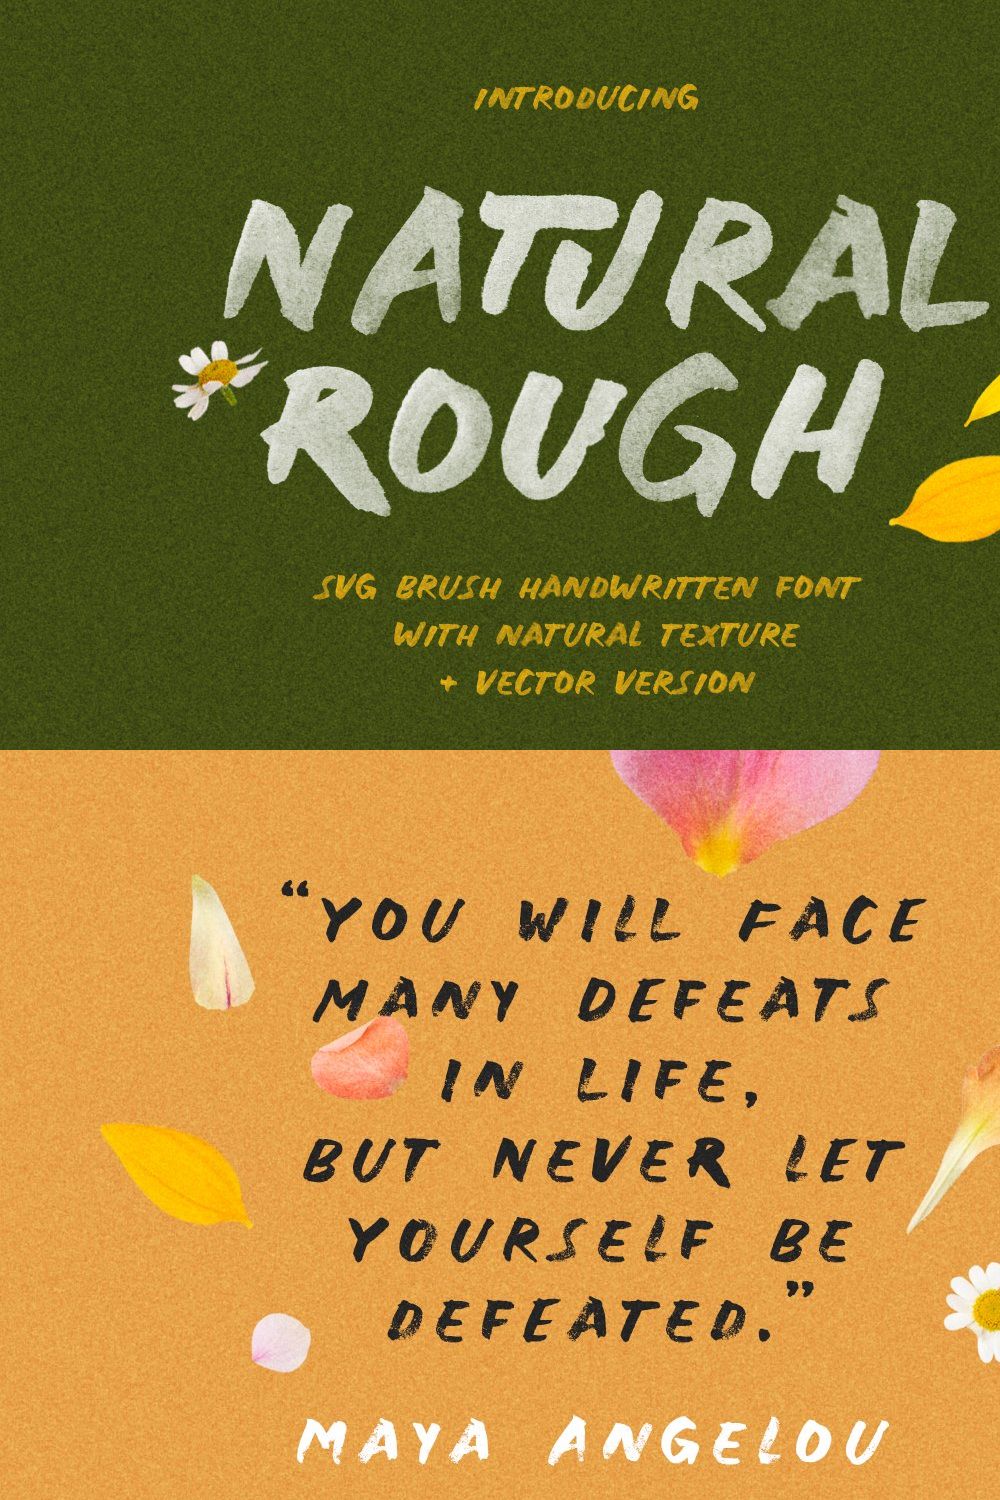 Natural Rough- SVG Handwritten Font pinterest preview image.